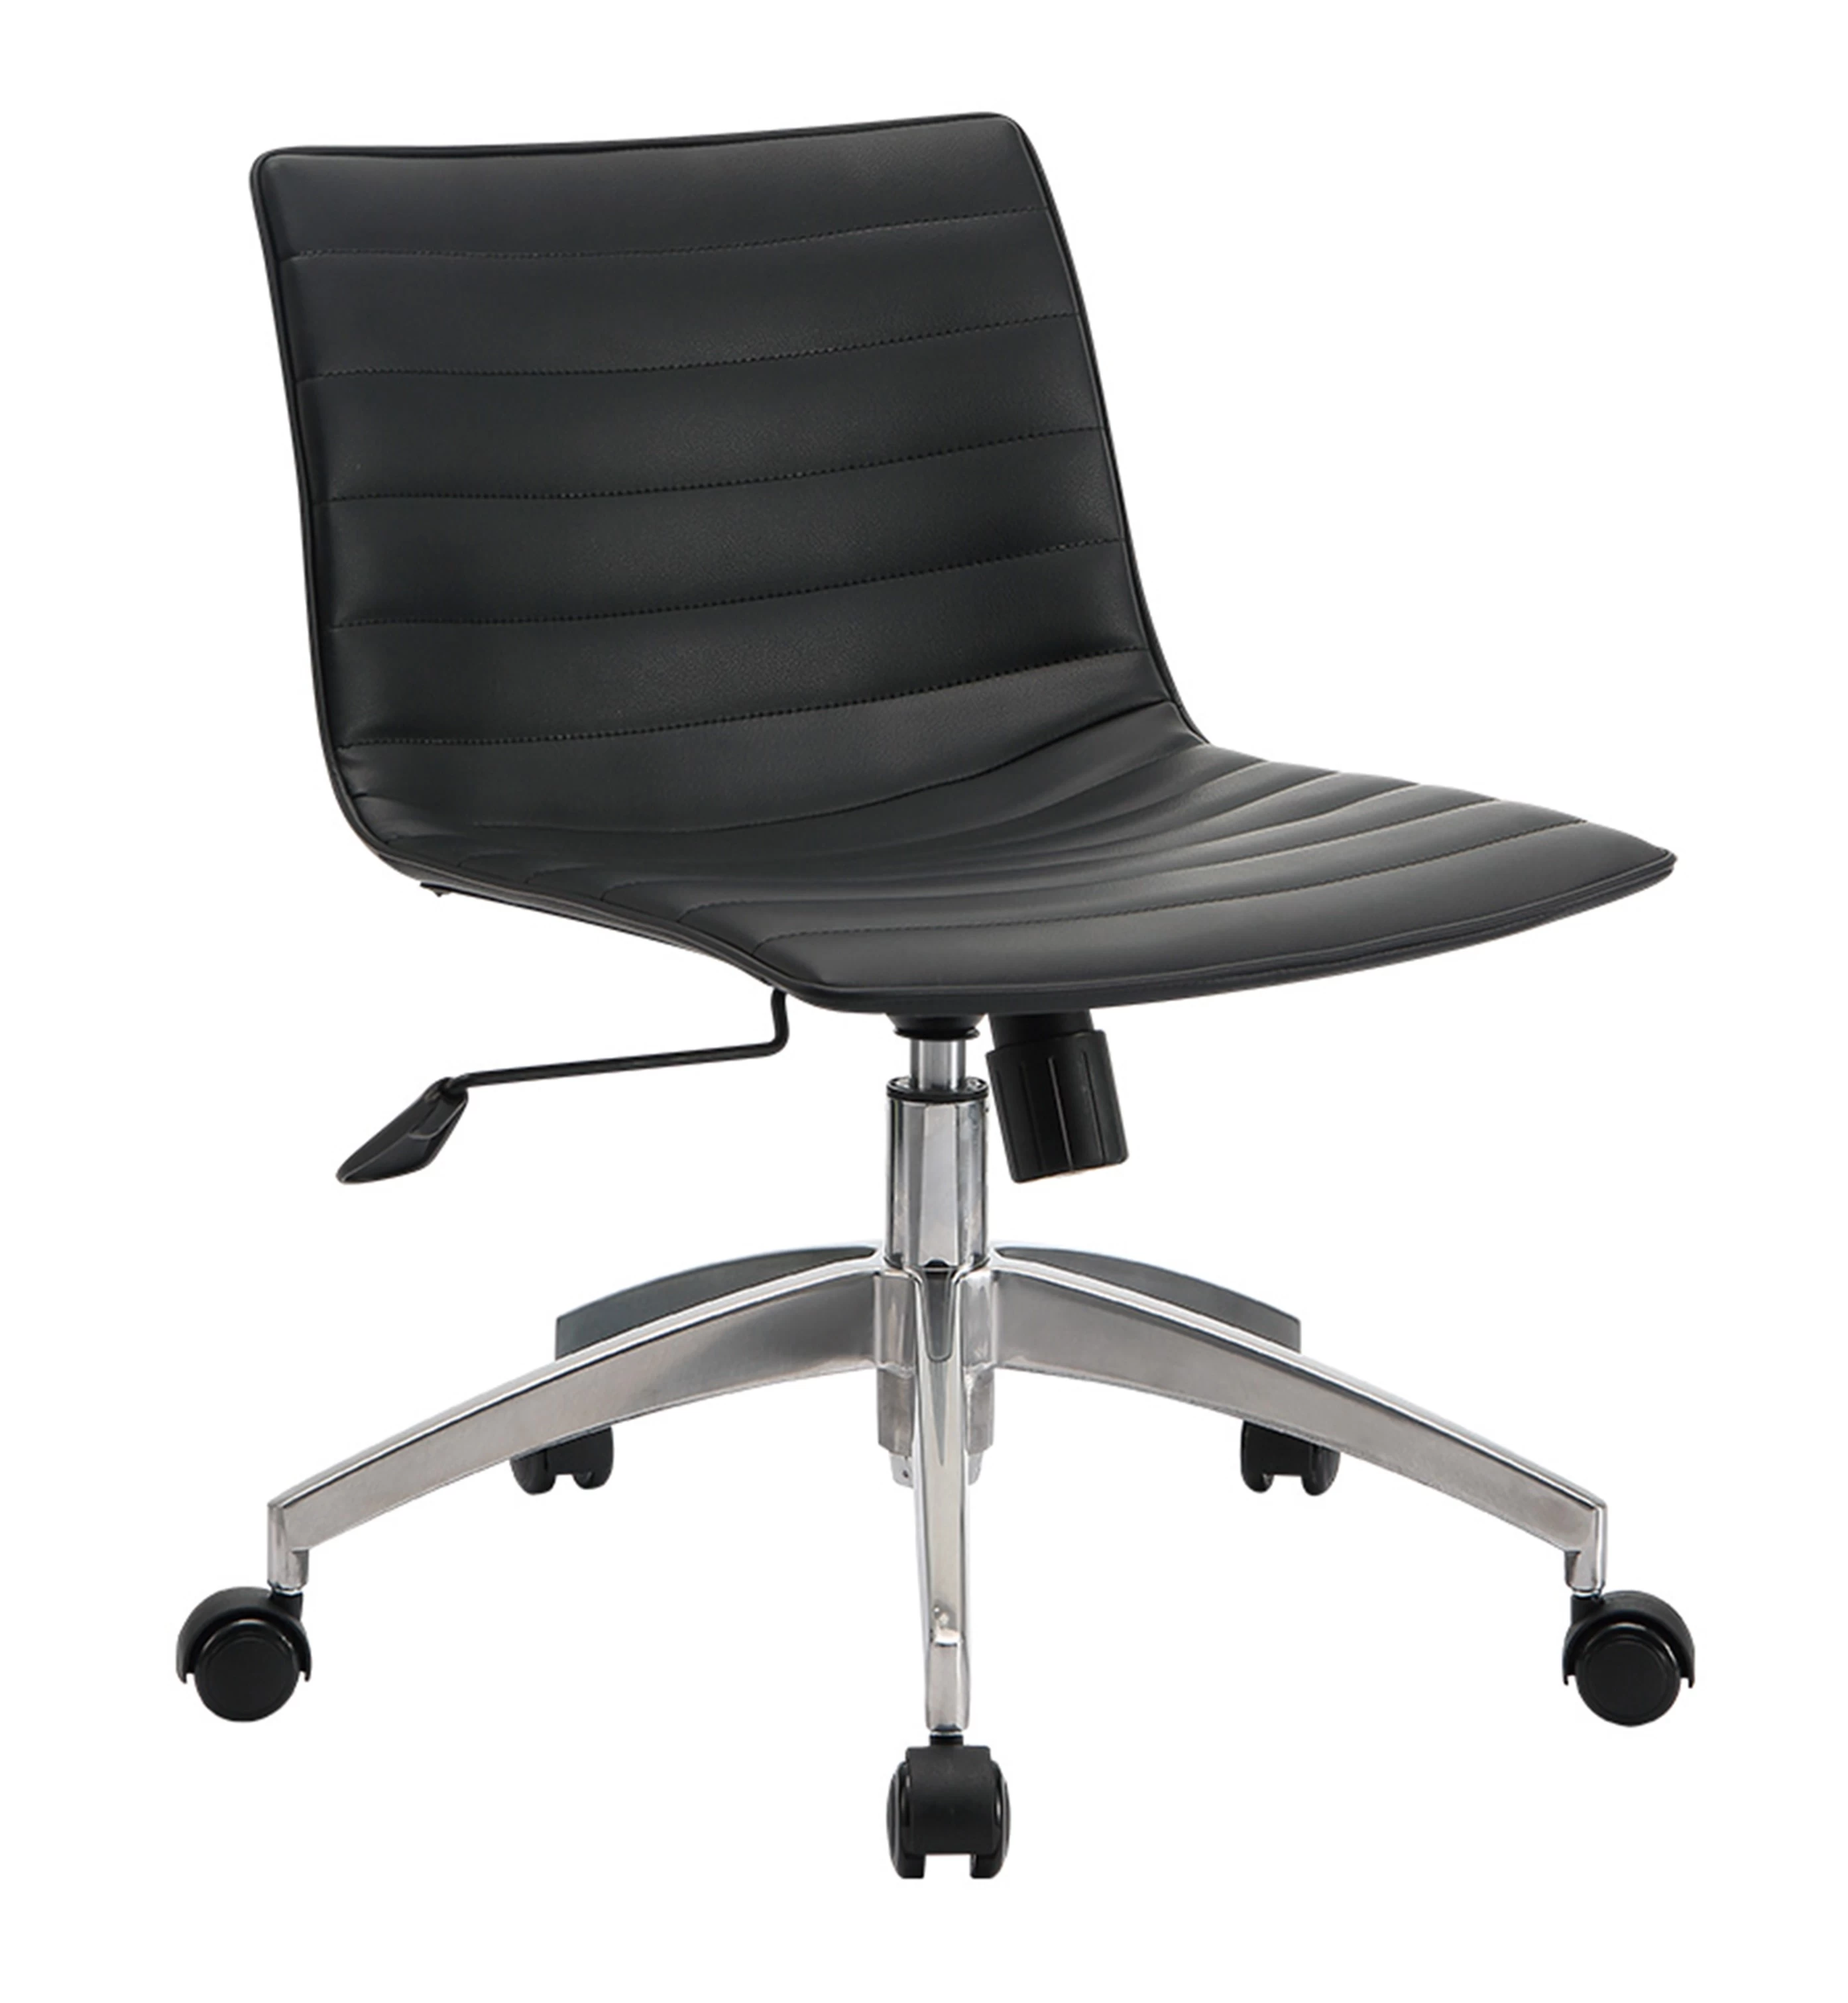 Newcity 6625B India Pure White Office Chair Luxury منتصف الظهر قطب كرسي المكتب التنفيذي تصميم جديد من اجتماع المؤتمر مكتب الرئاسة كرسي المورد فوشان الصين